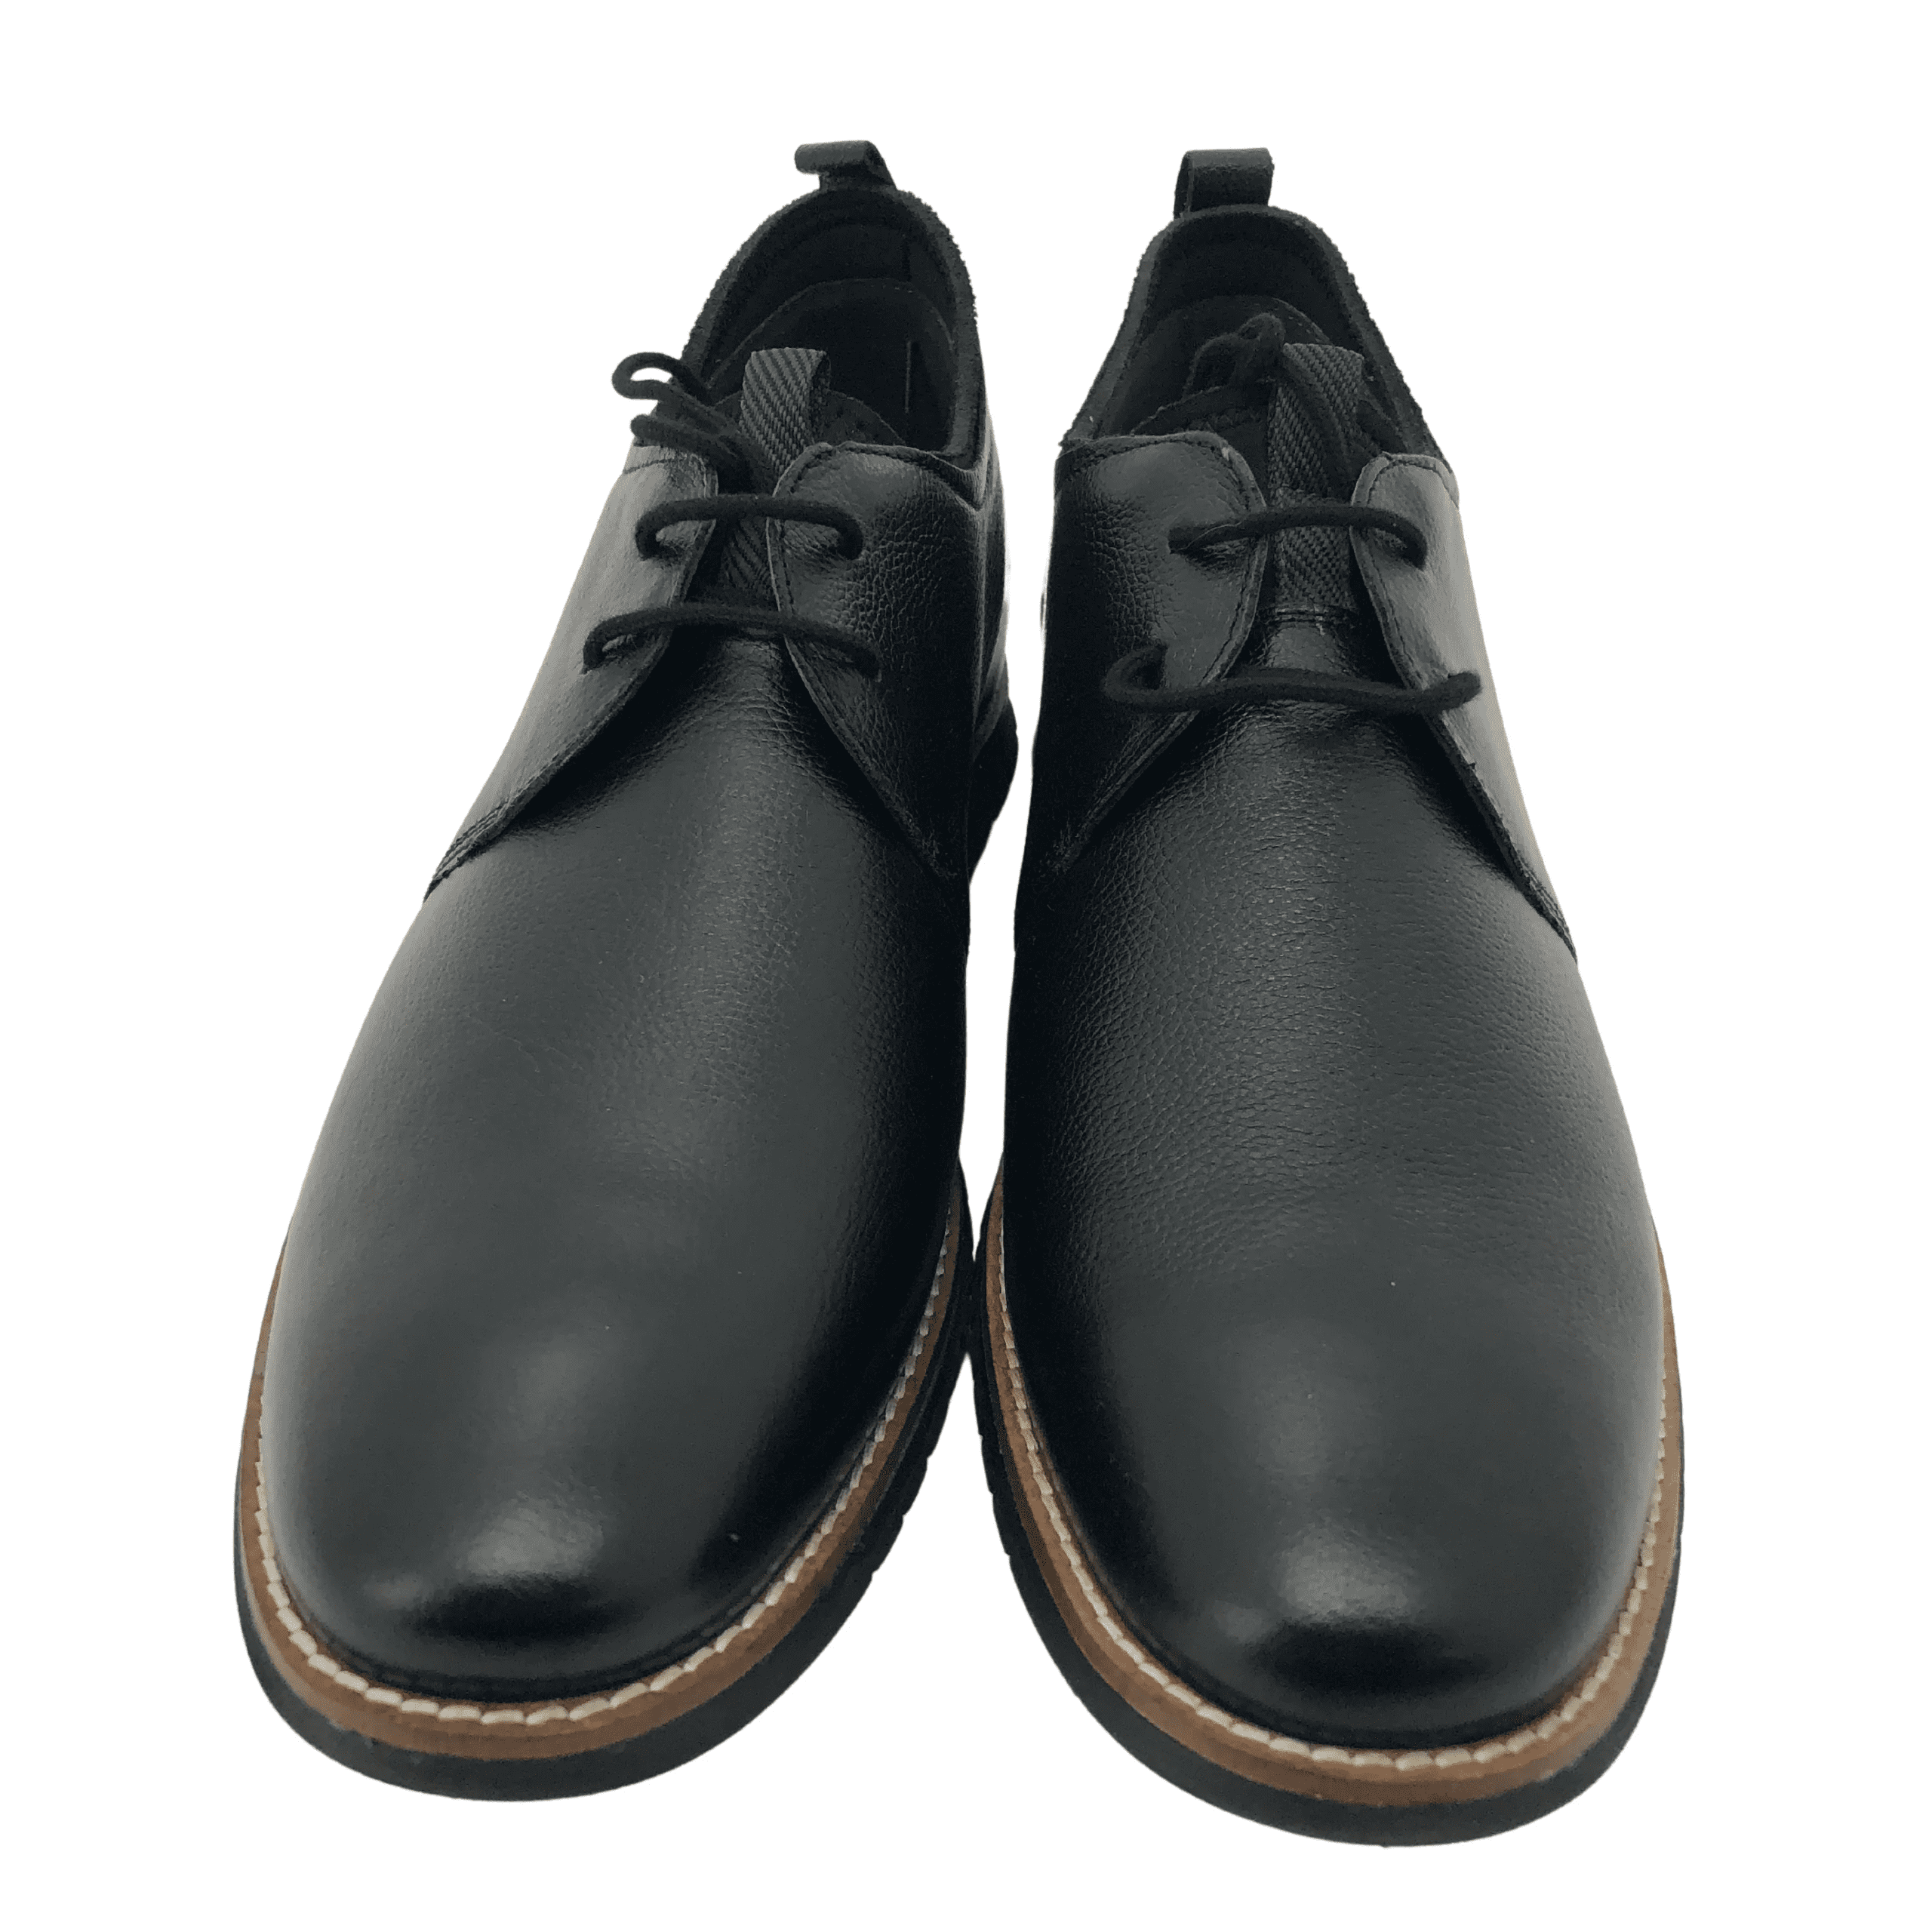 Hush Puppies Men’s Black Oxford Dress Shoes / Various Sizes ...